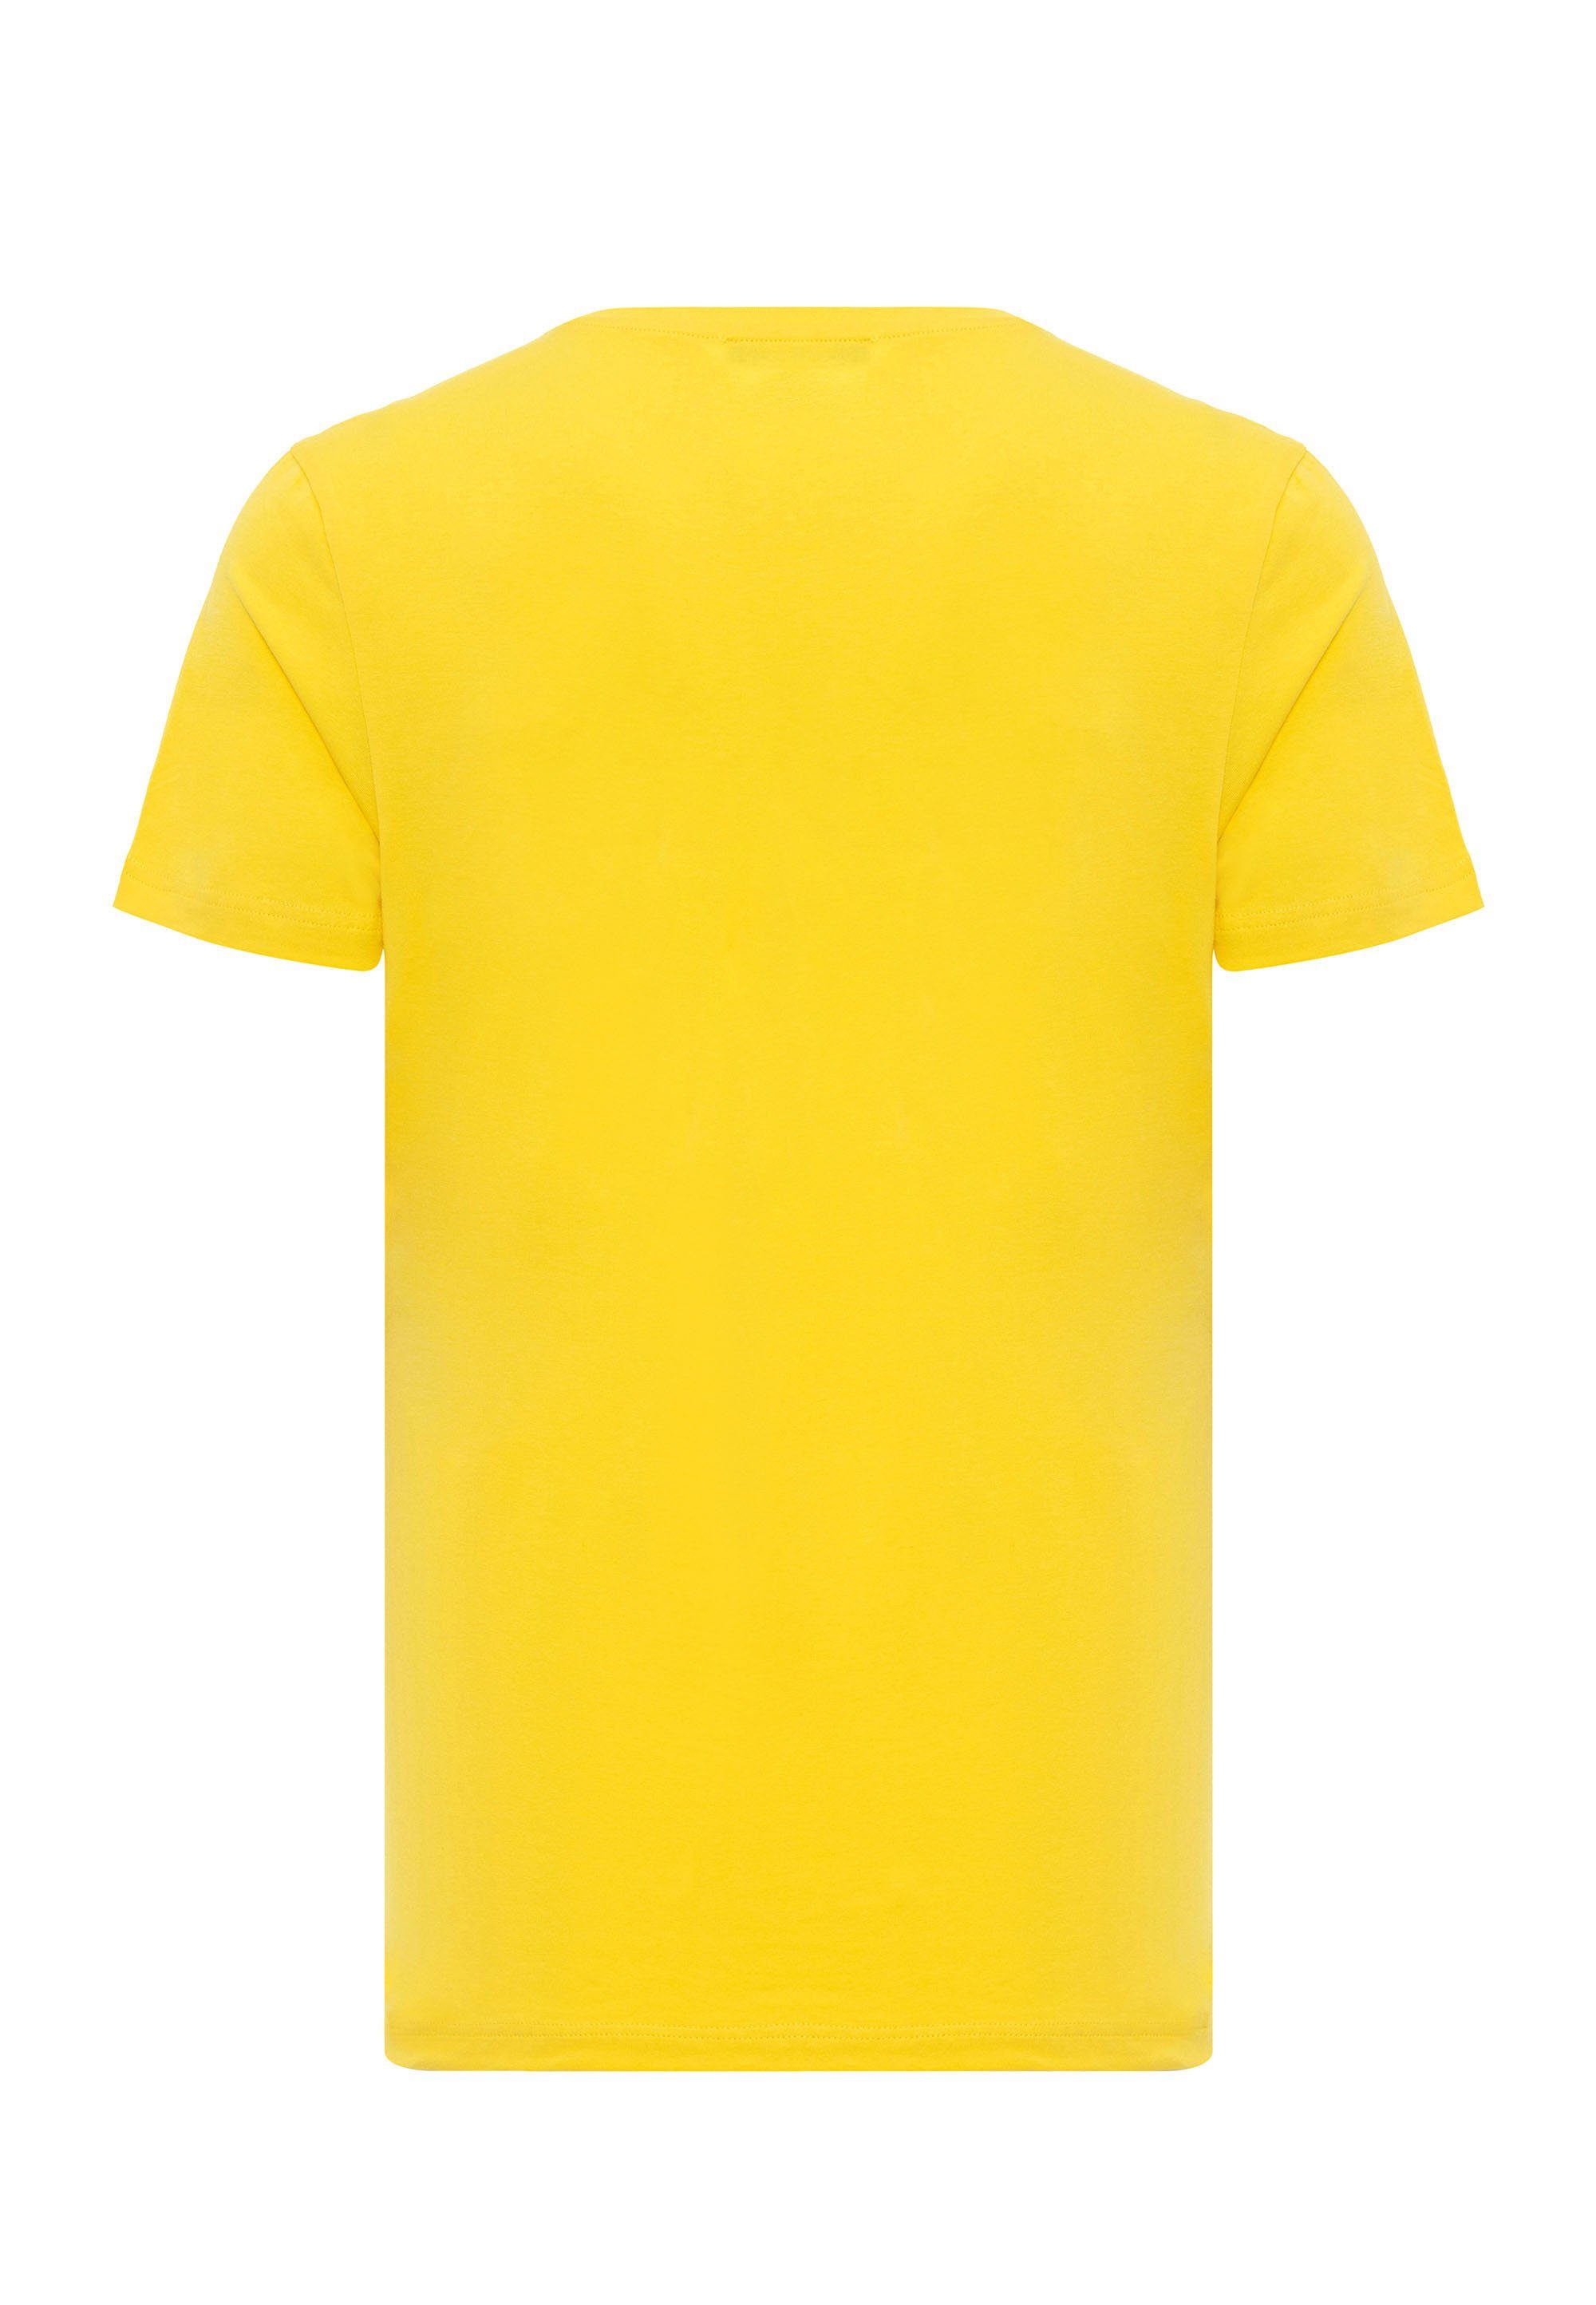 Cipo & Baxx gelb Marken-Schriftzug trendigem T-Shirt mit